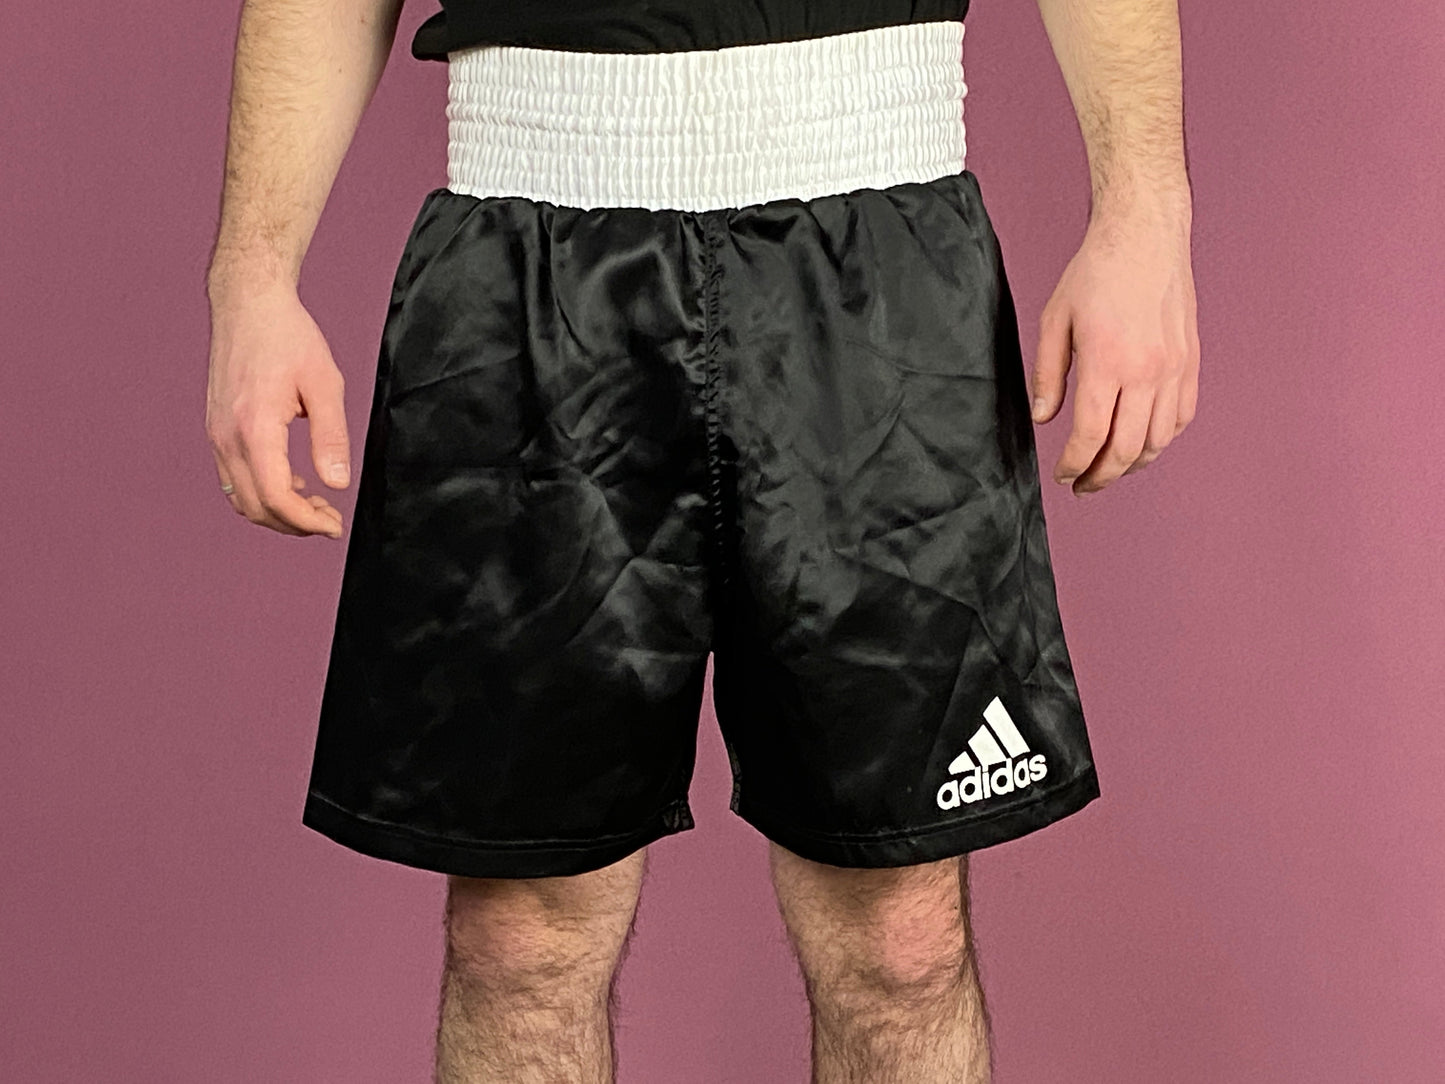 Adidas Men's Boxing Shorts - XS Black Polyester